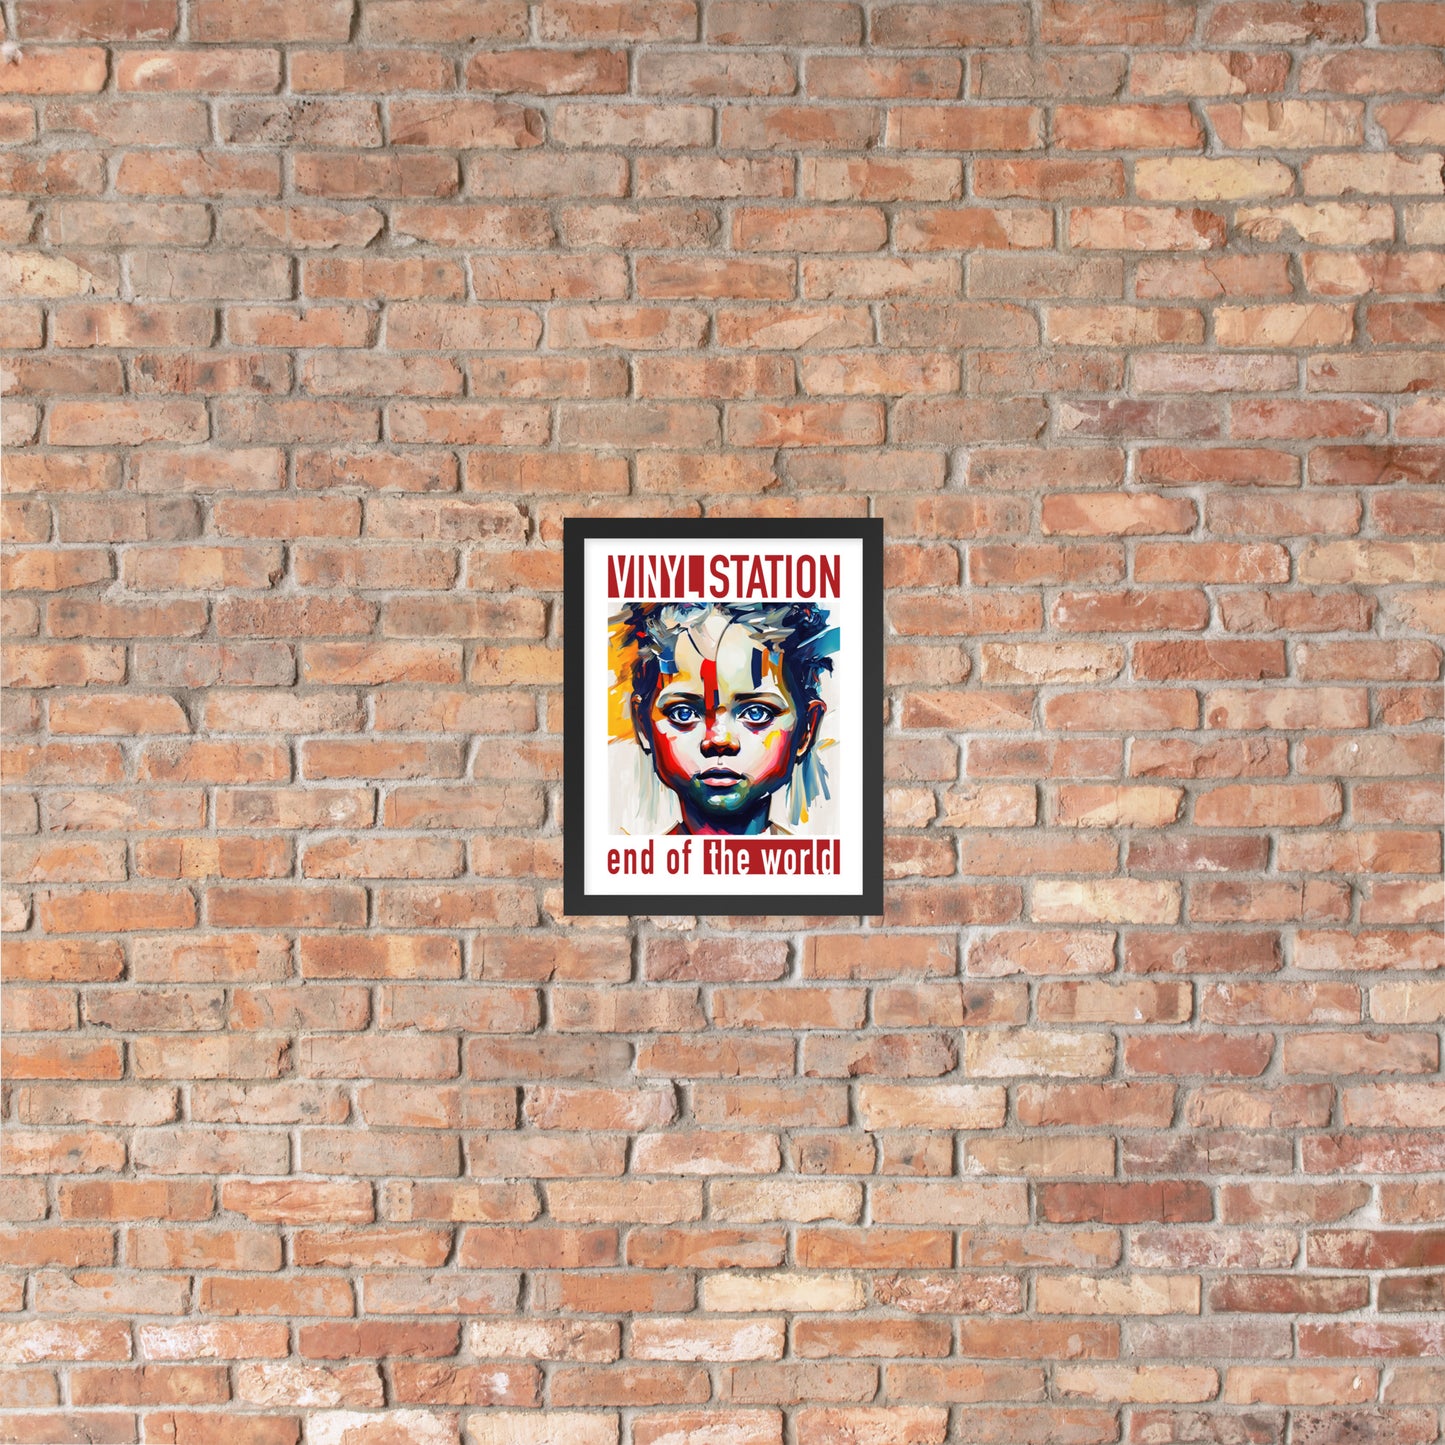 Vinyl Station - Framed poster - End of the World